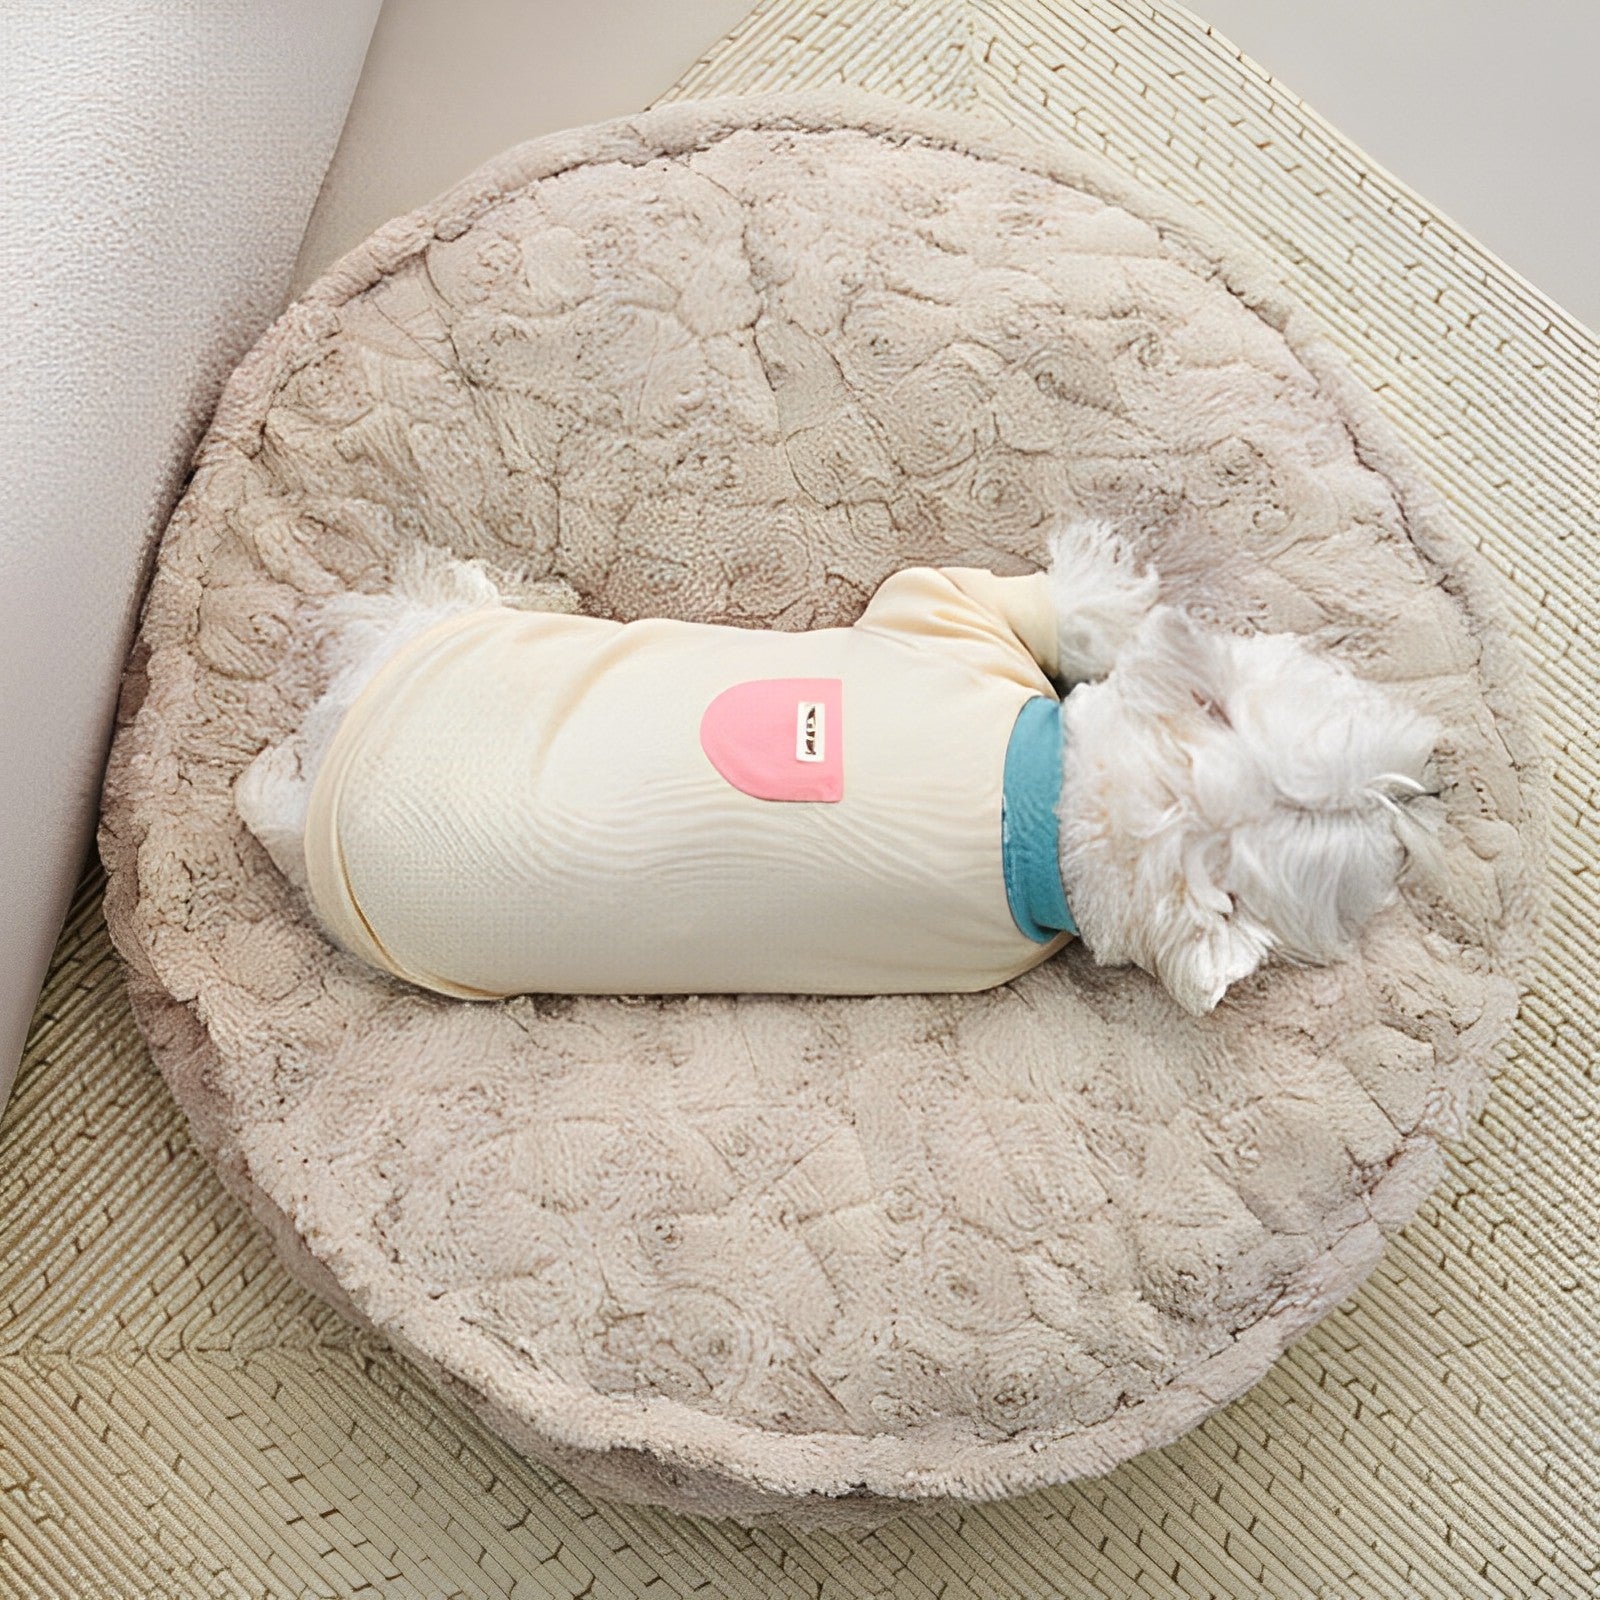 Fluffy Plush Cloud Dog Bed petin